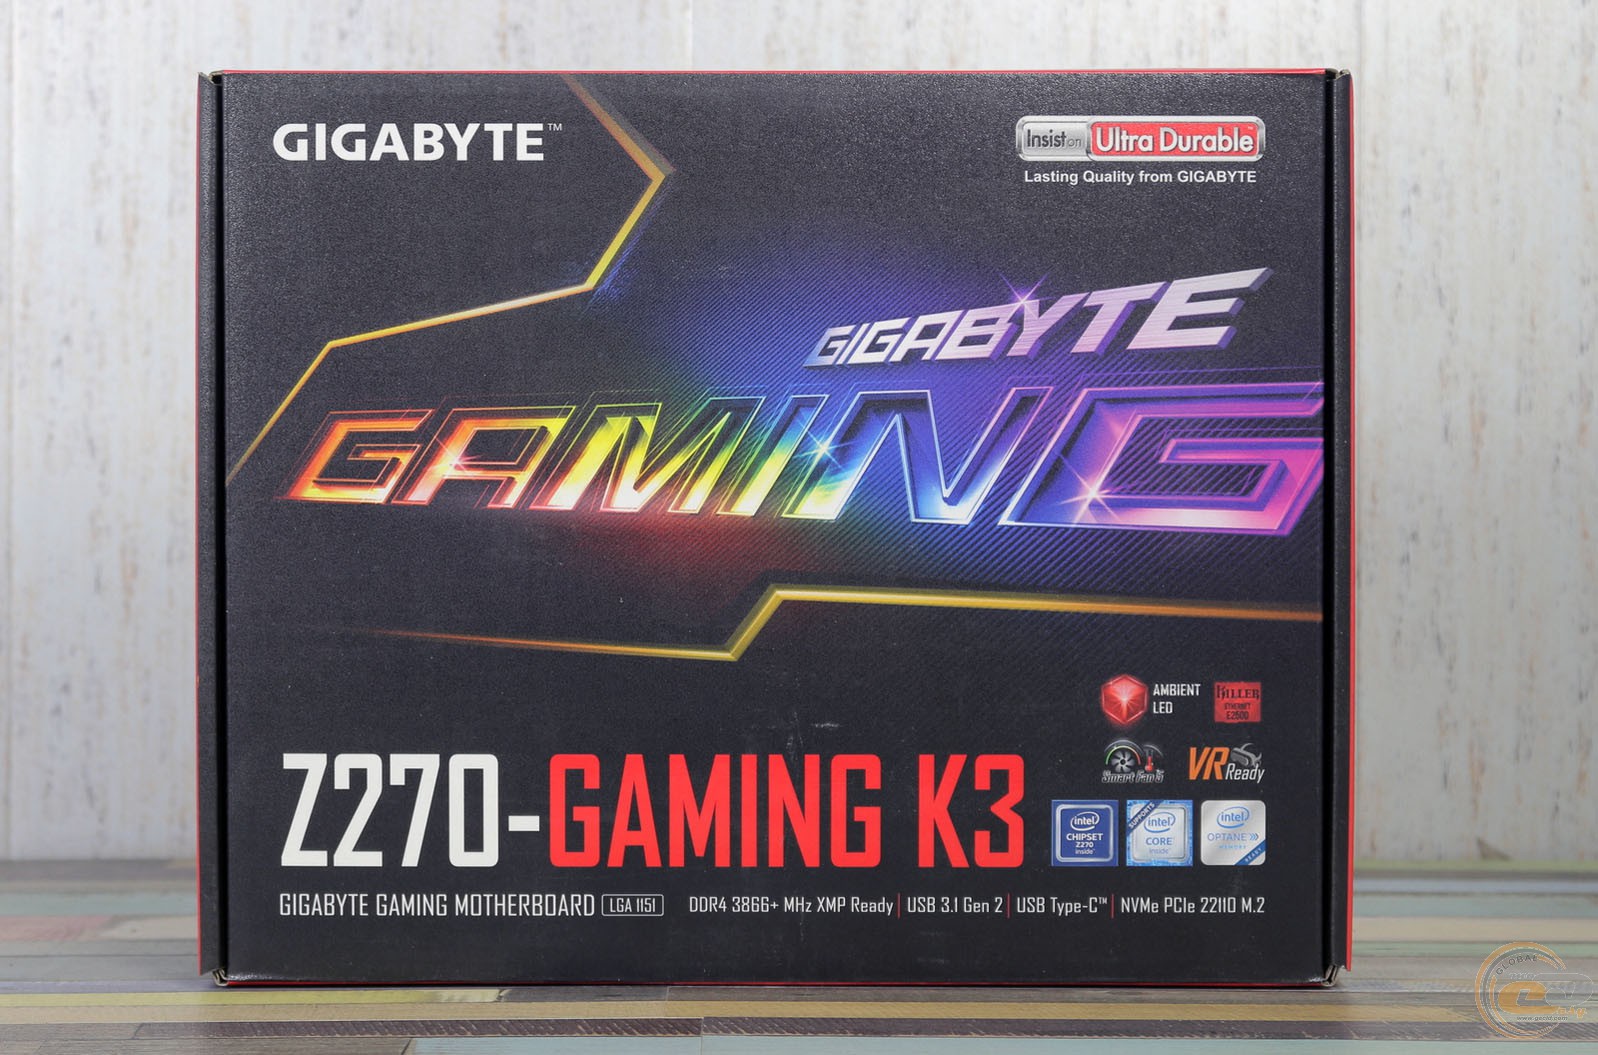 Gigabyte z270 Gaming k3. Gigabyte ga-z270-Gaming k3. Gigabyte Ultra durable Core 2 Dua. Gigabyte insist on Ultra durable желтый цвет BIOS.